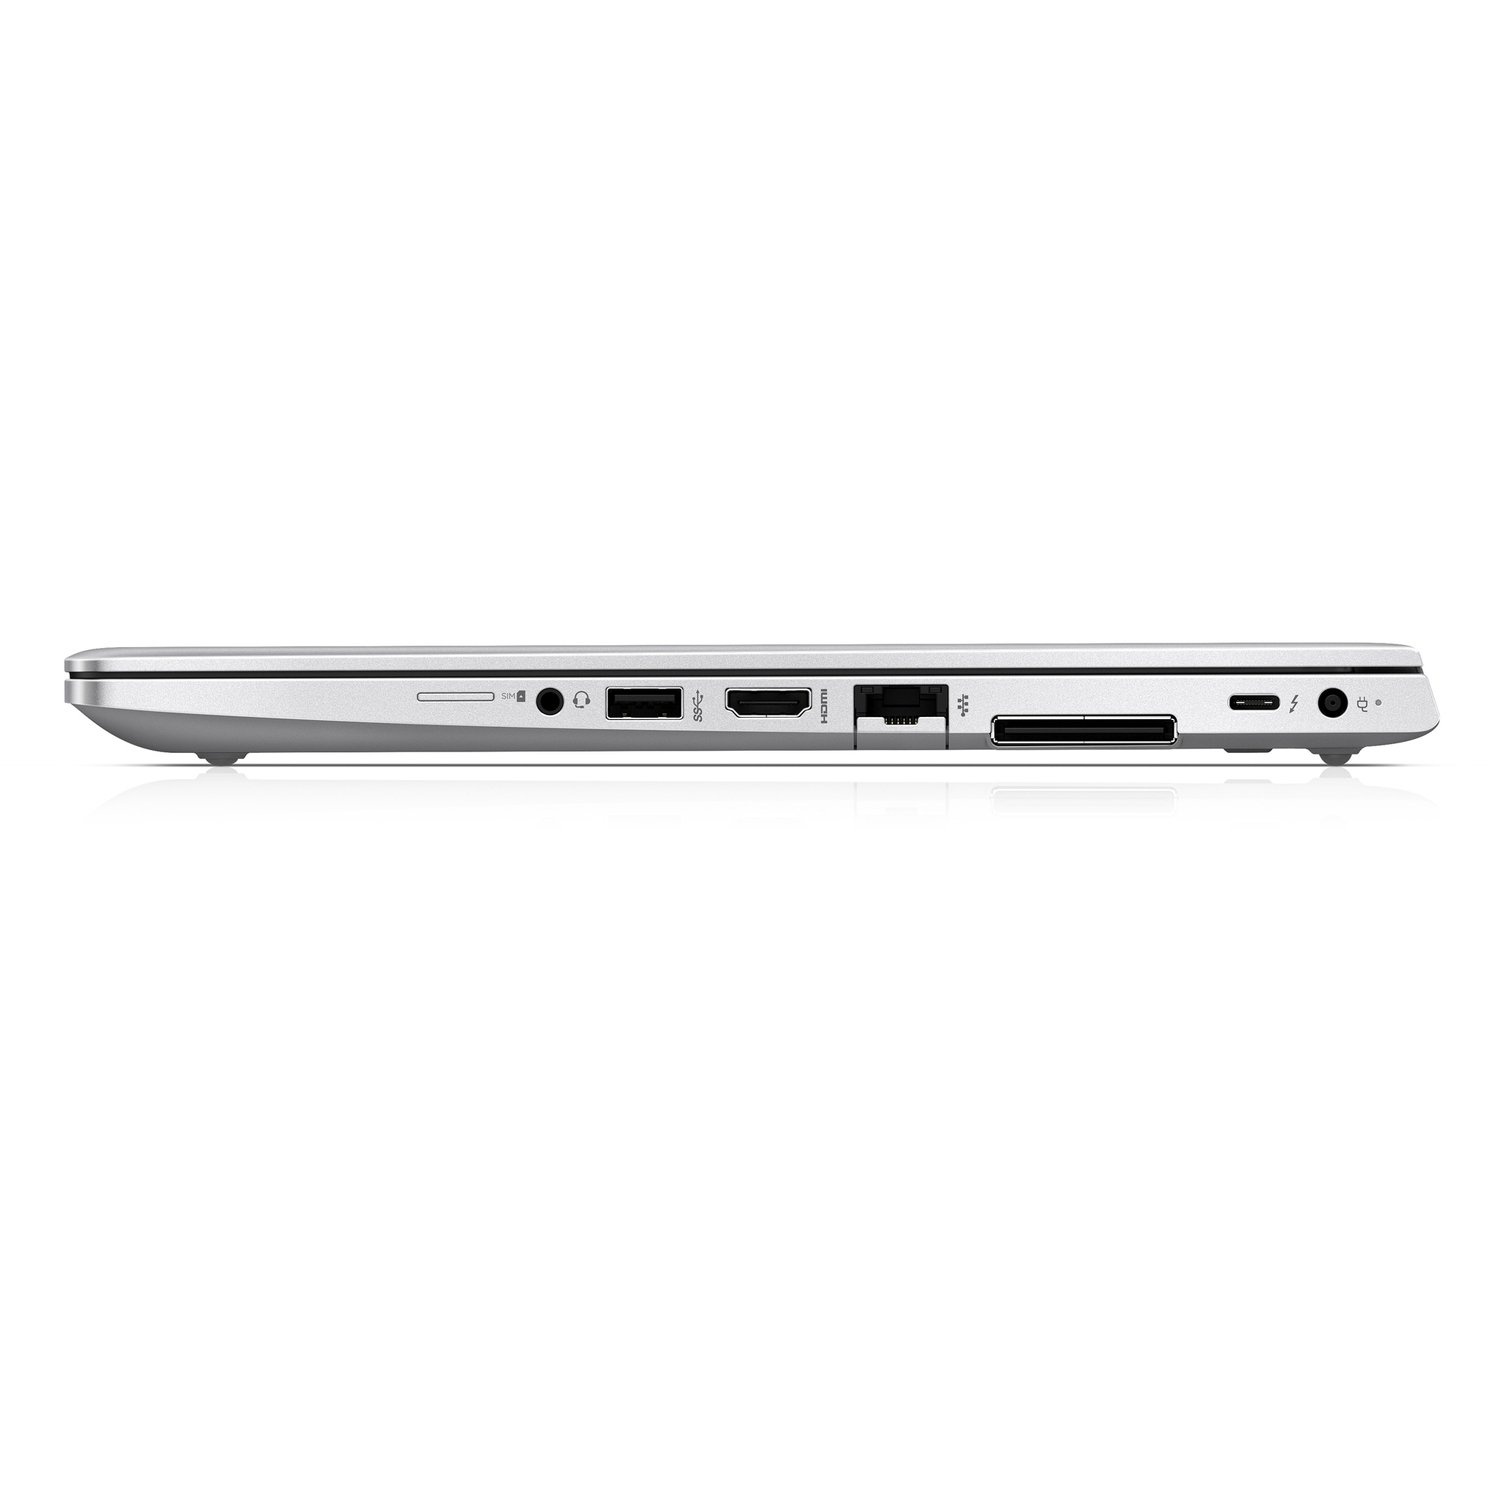 Ноутбук HP Elitebook 830 G5 Core i7-8550U 1.8GHz,13.3" FHD (1920x1080) IPS AG,8Gb DDR4(1),256Gb SSD,50Wh LL,FPR,1.4kg,3y,Silver,Win10Pro-15981